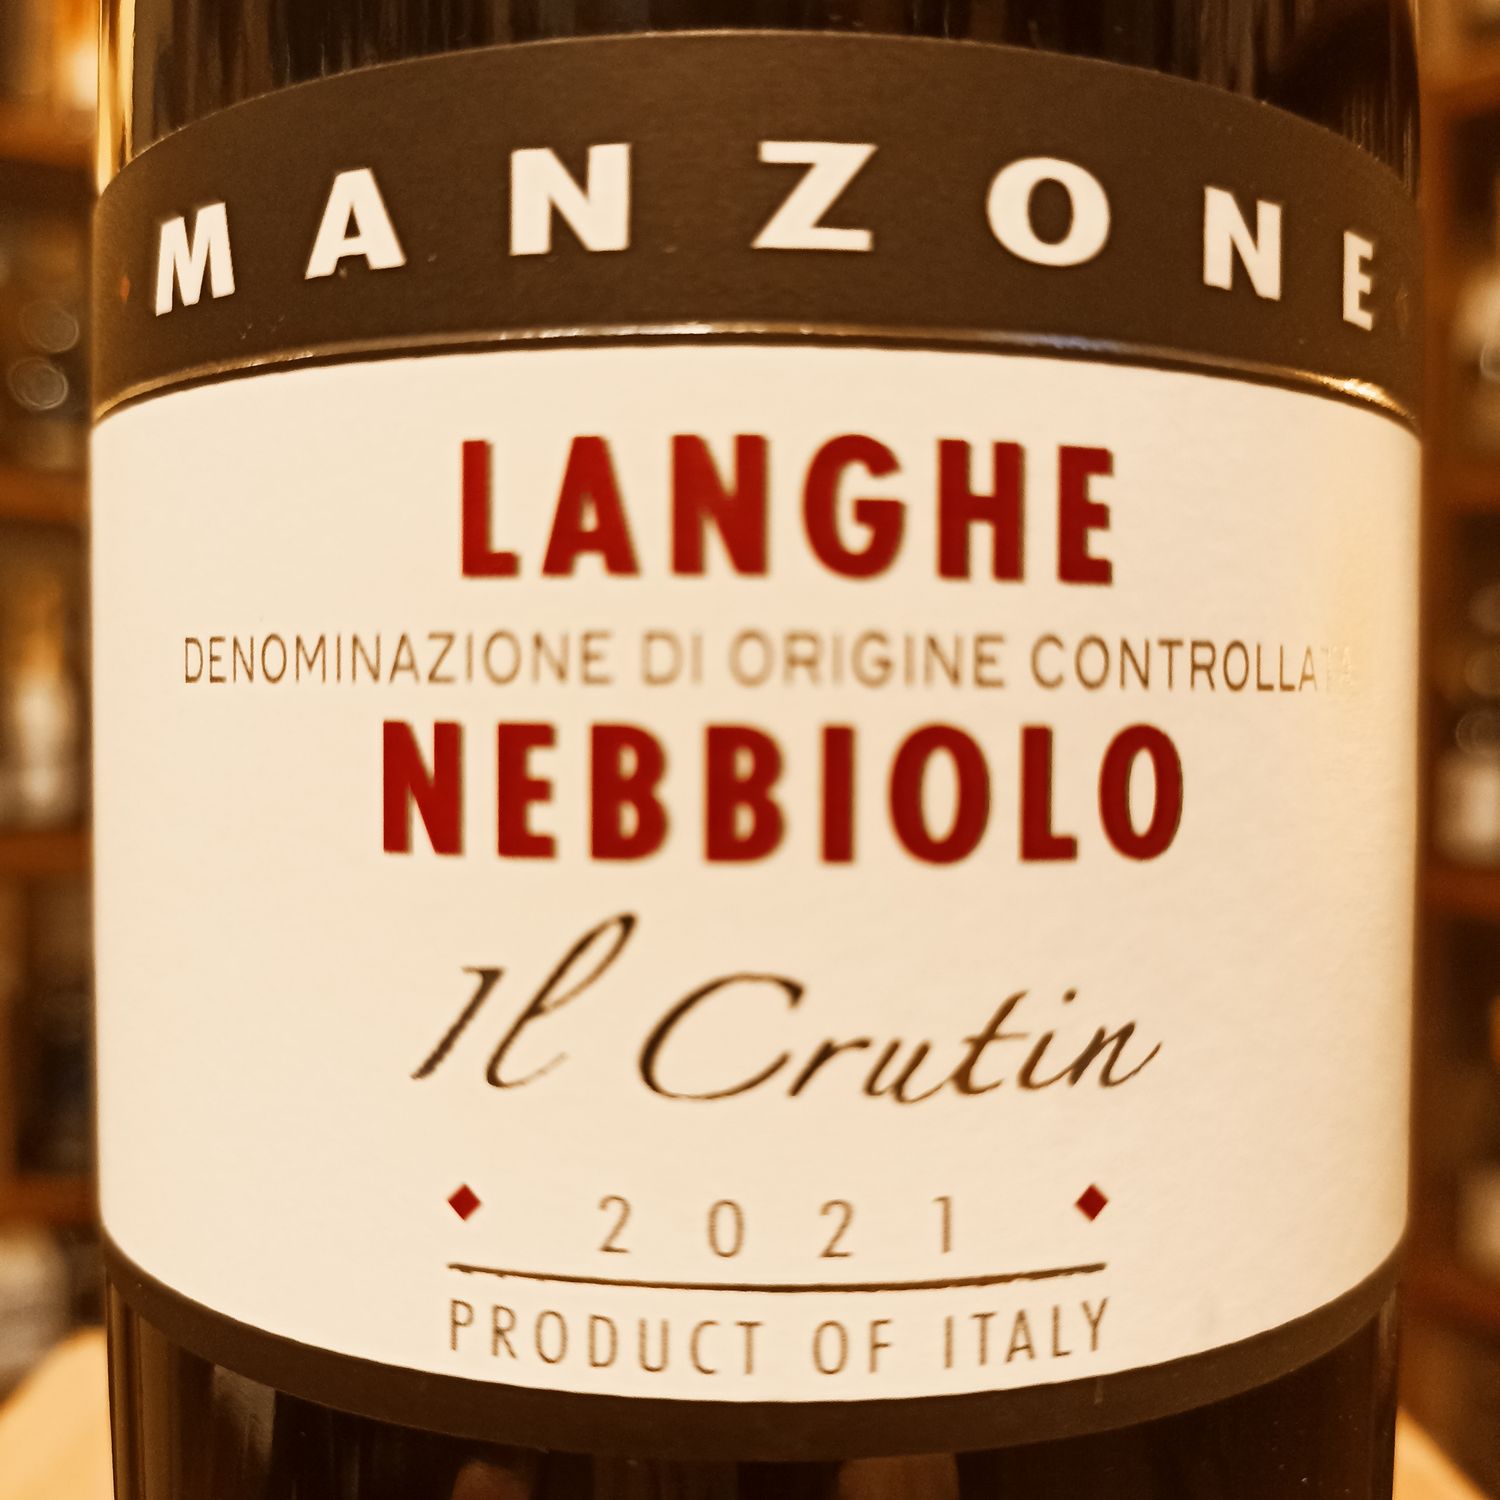 Langhe Nebbiolo D.o.c. Il Crutin 2021 - Az. Vit. Manzone Giovanni - Monforte d'Alba CN - 0,75 L